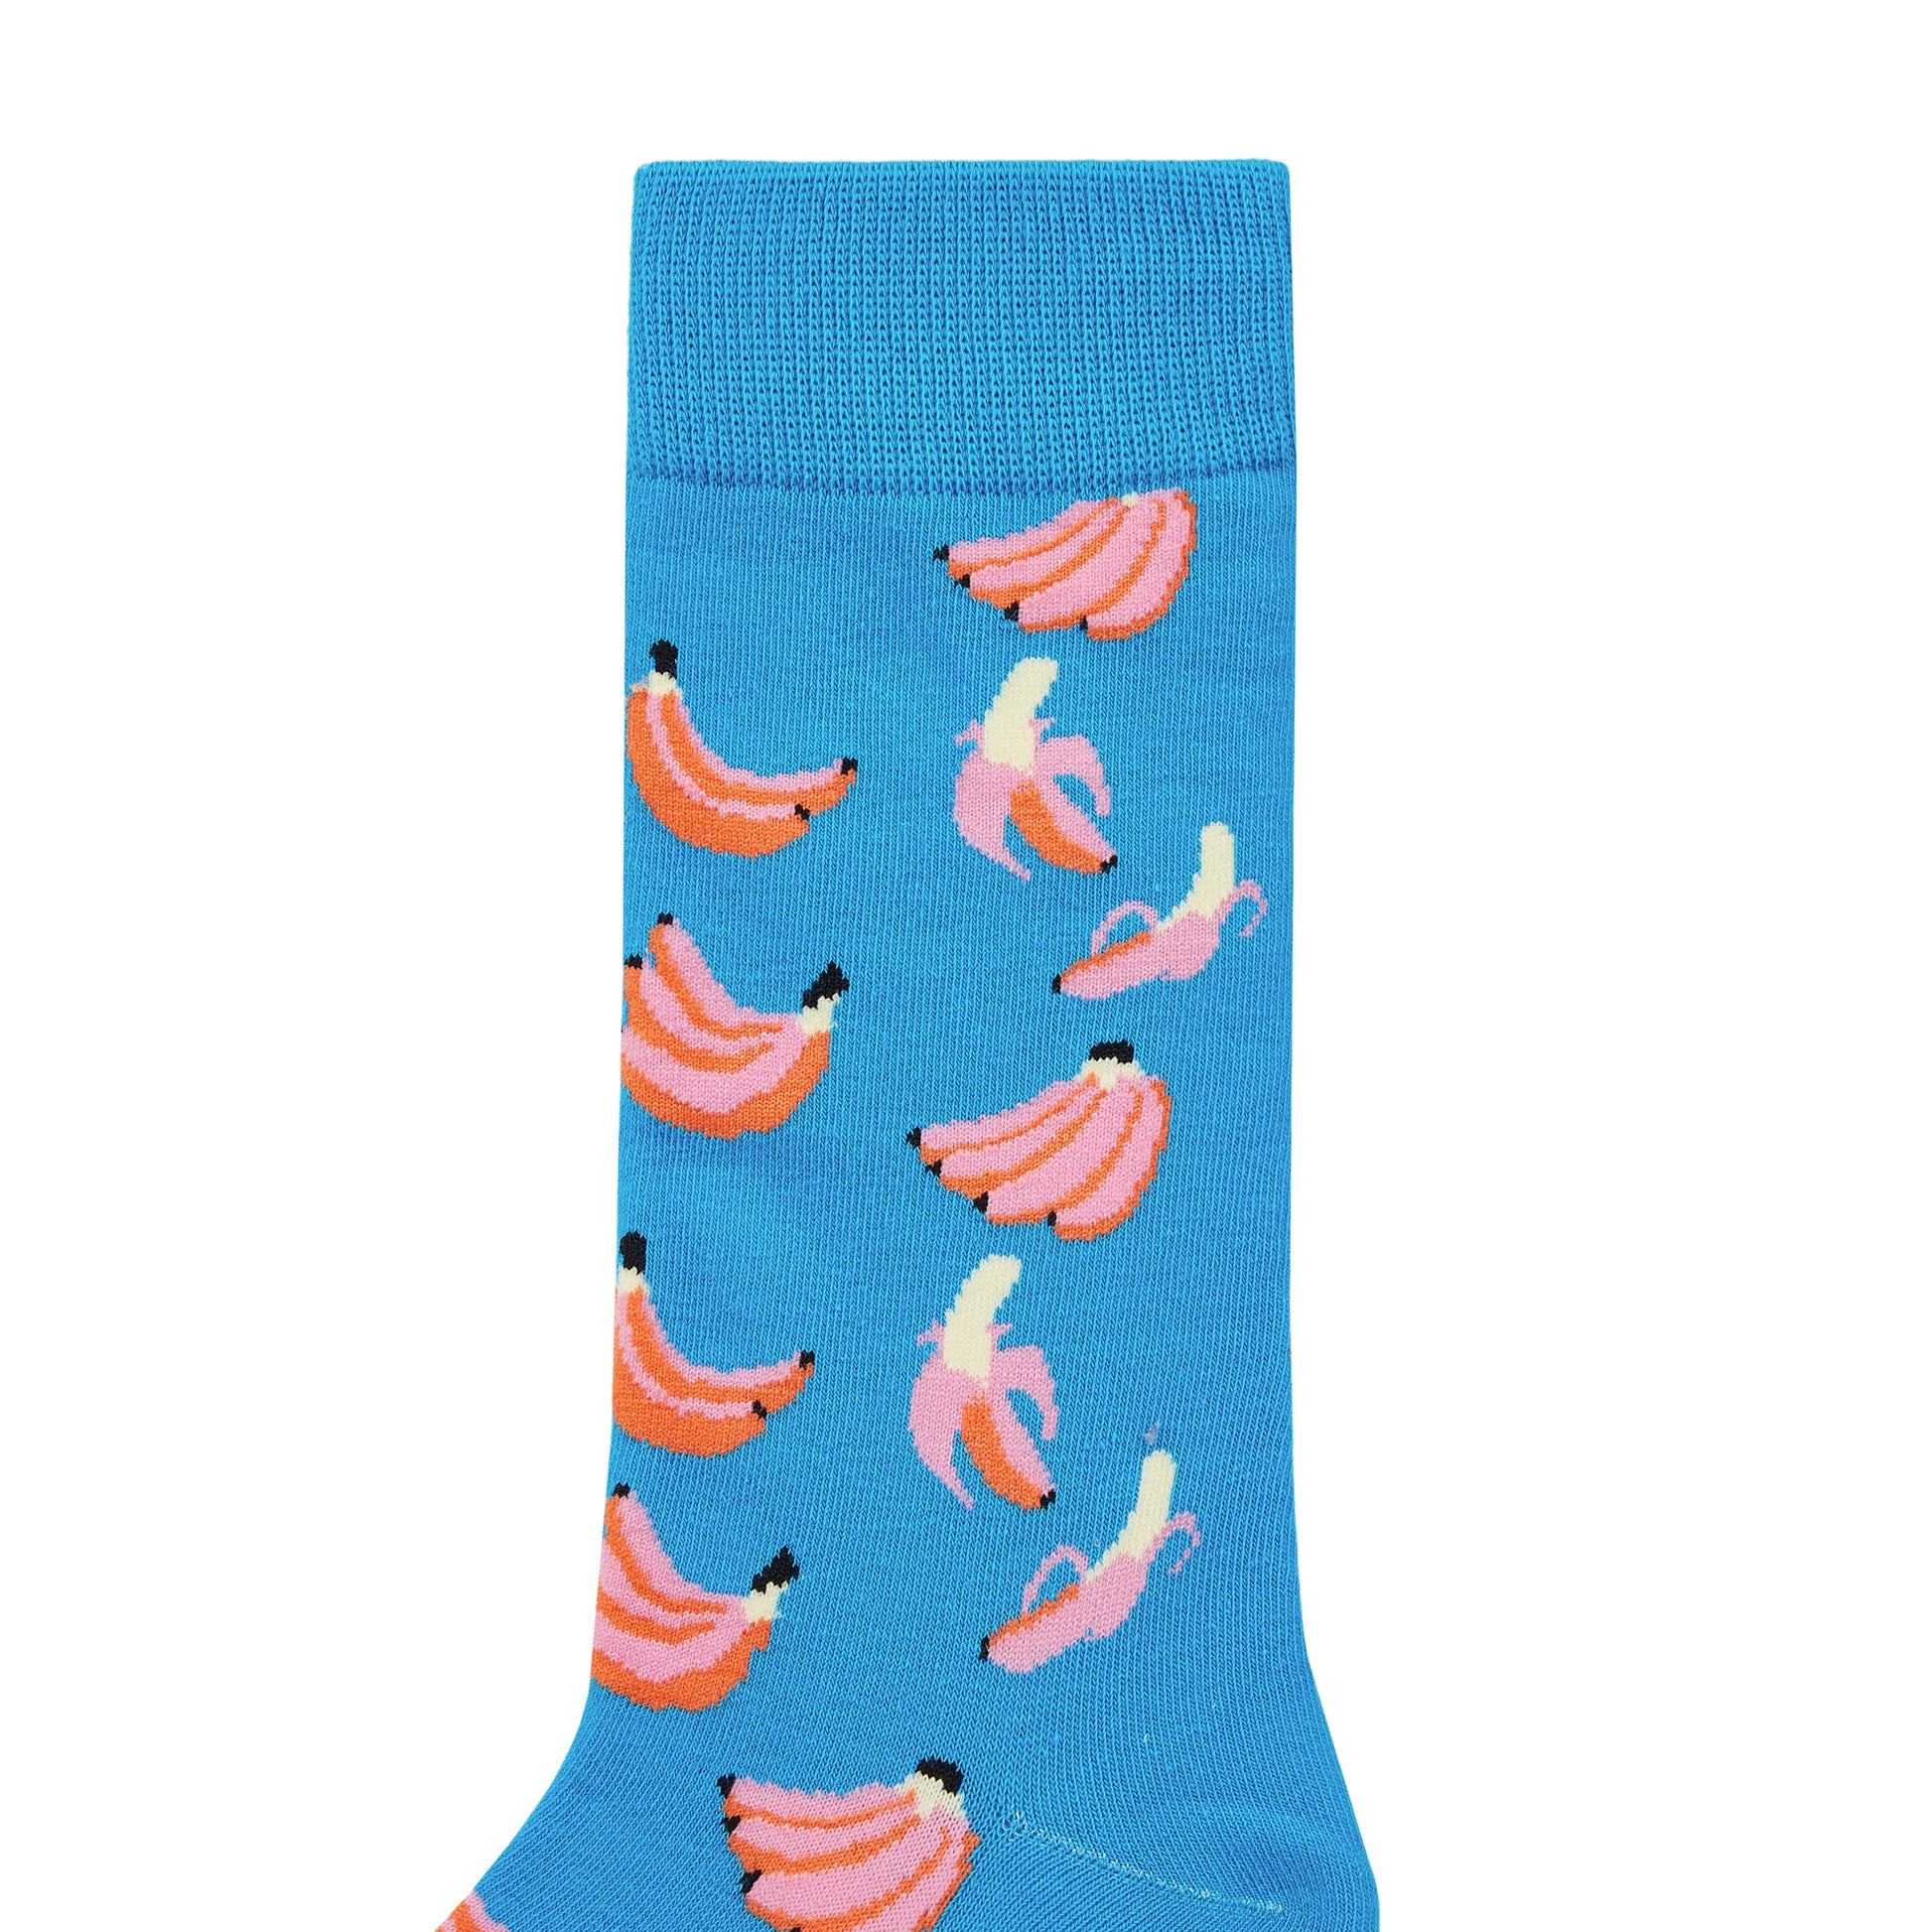 Pink Banana Printed Mid-Calf Length Socks - IDENTITY Apparel Shop